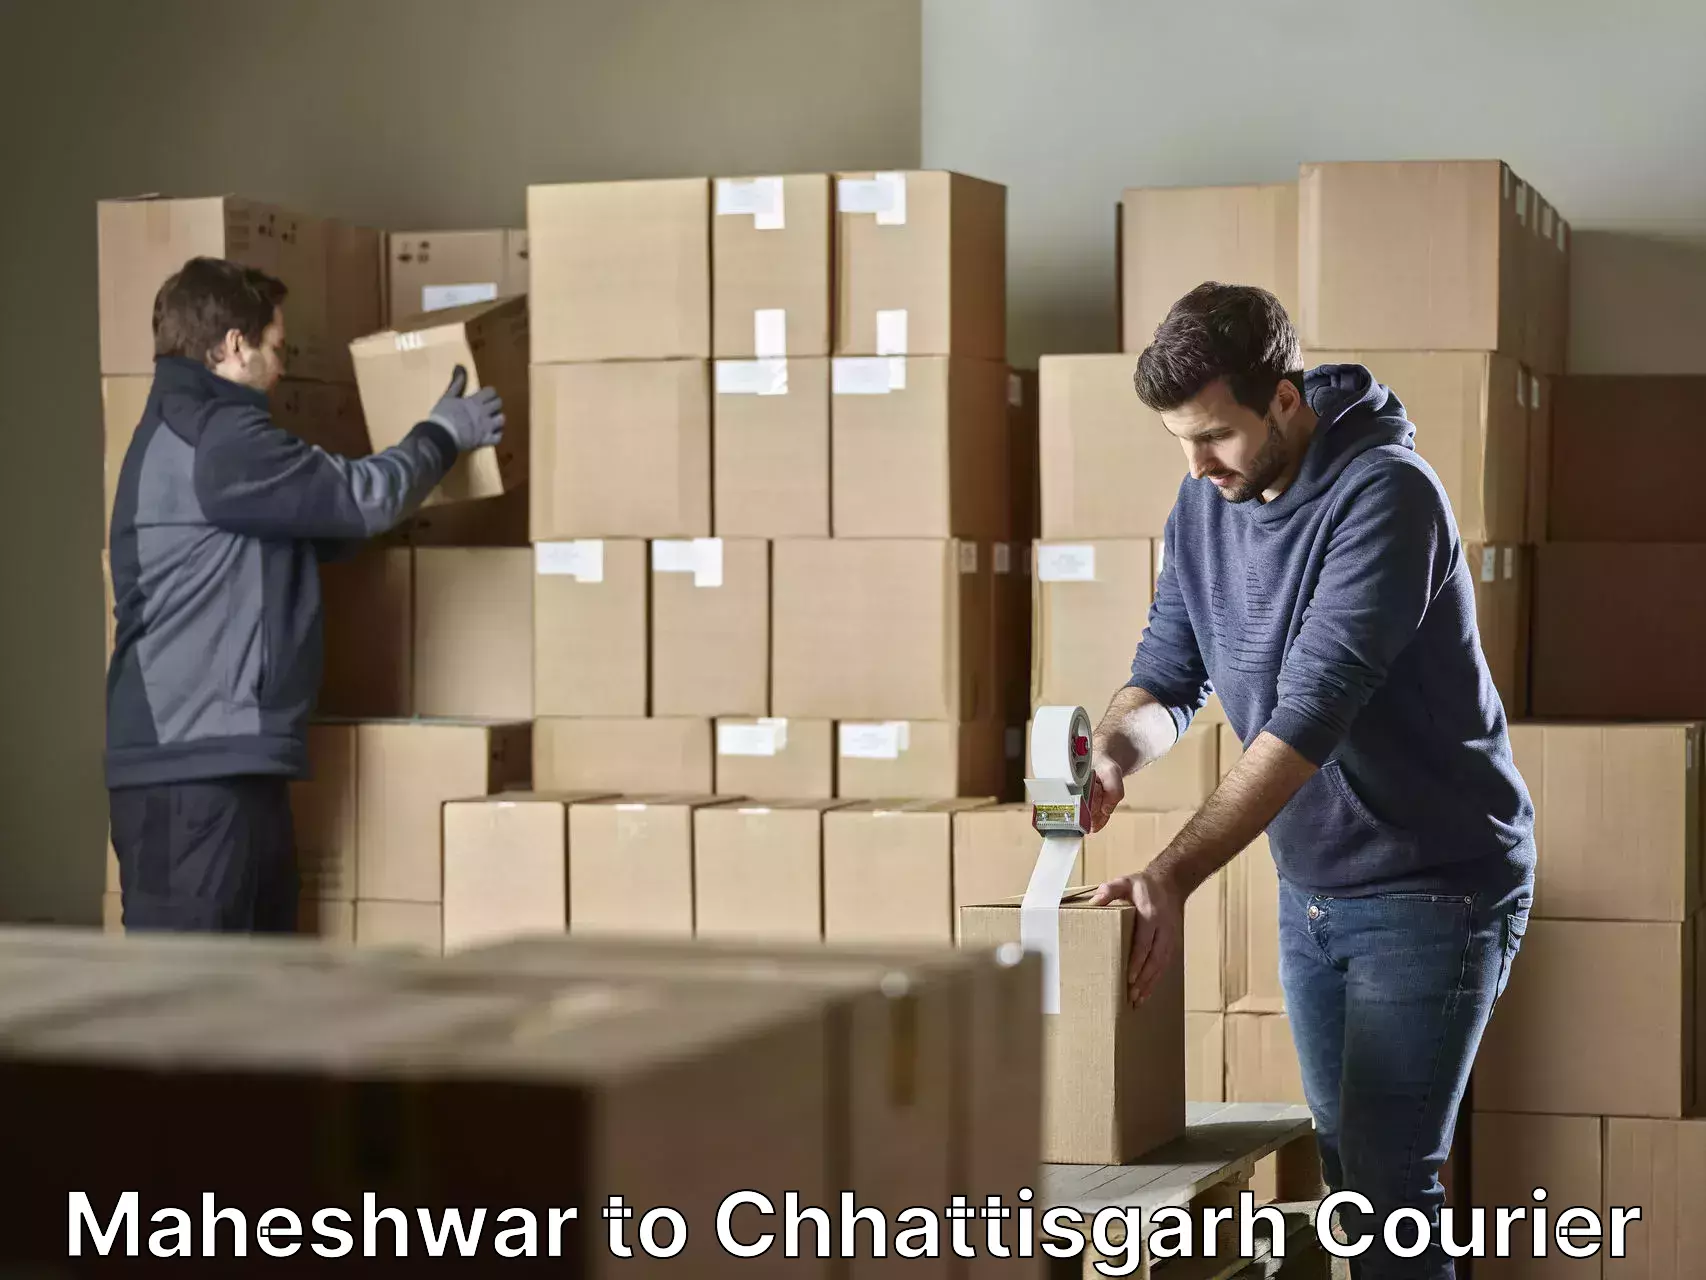 Professional moving company Maheshwar to bagbahra